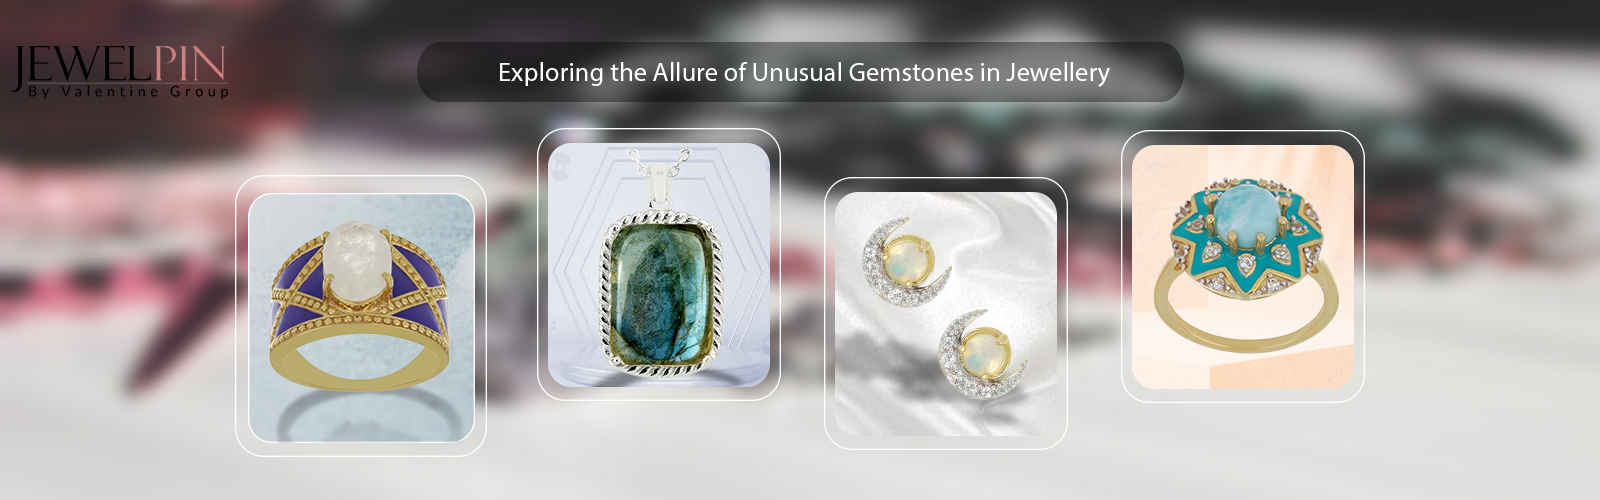 JewelPin - Exploring the Allure of Unusual Gemstones in Jewellery